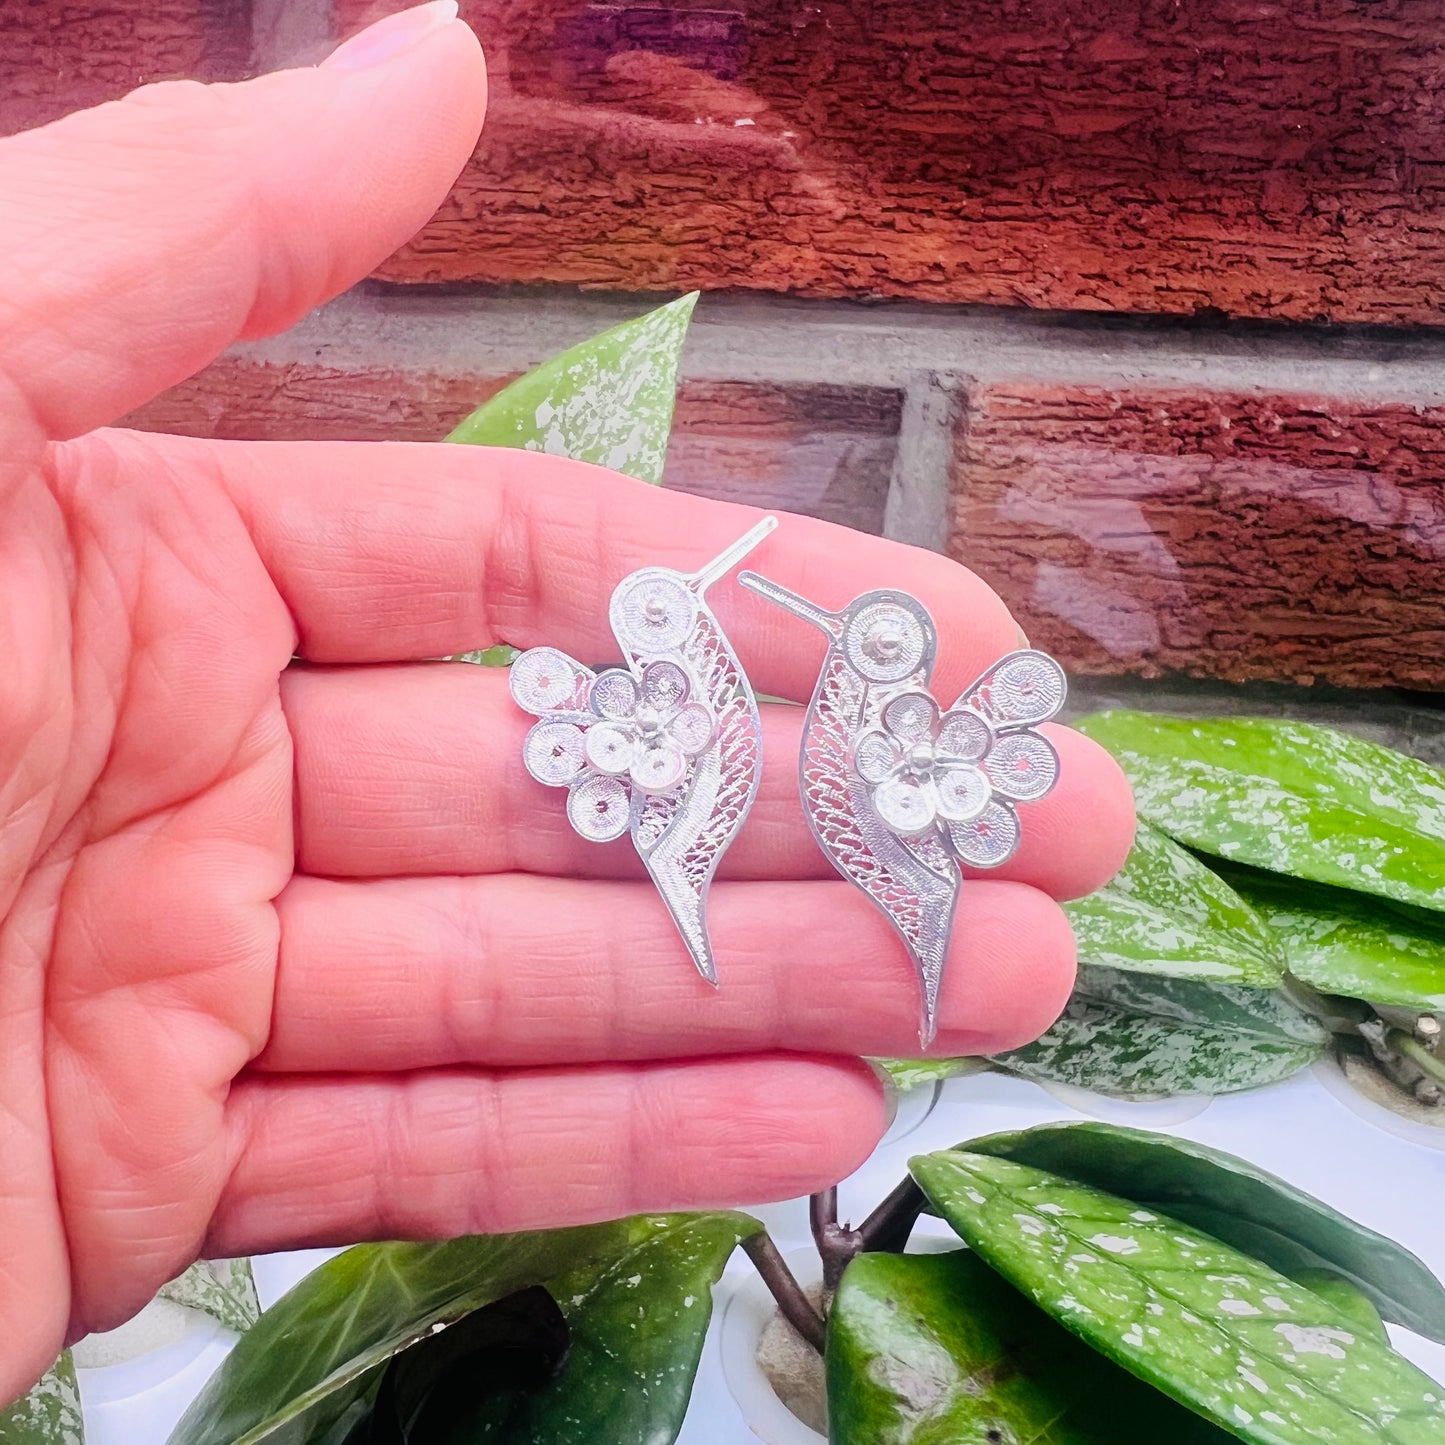 Øredobber kolibri i sølv, håndlagde i Ecuador